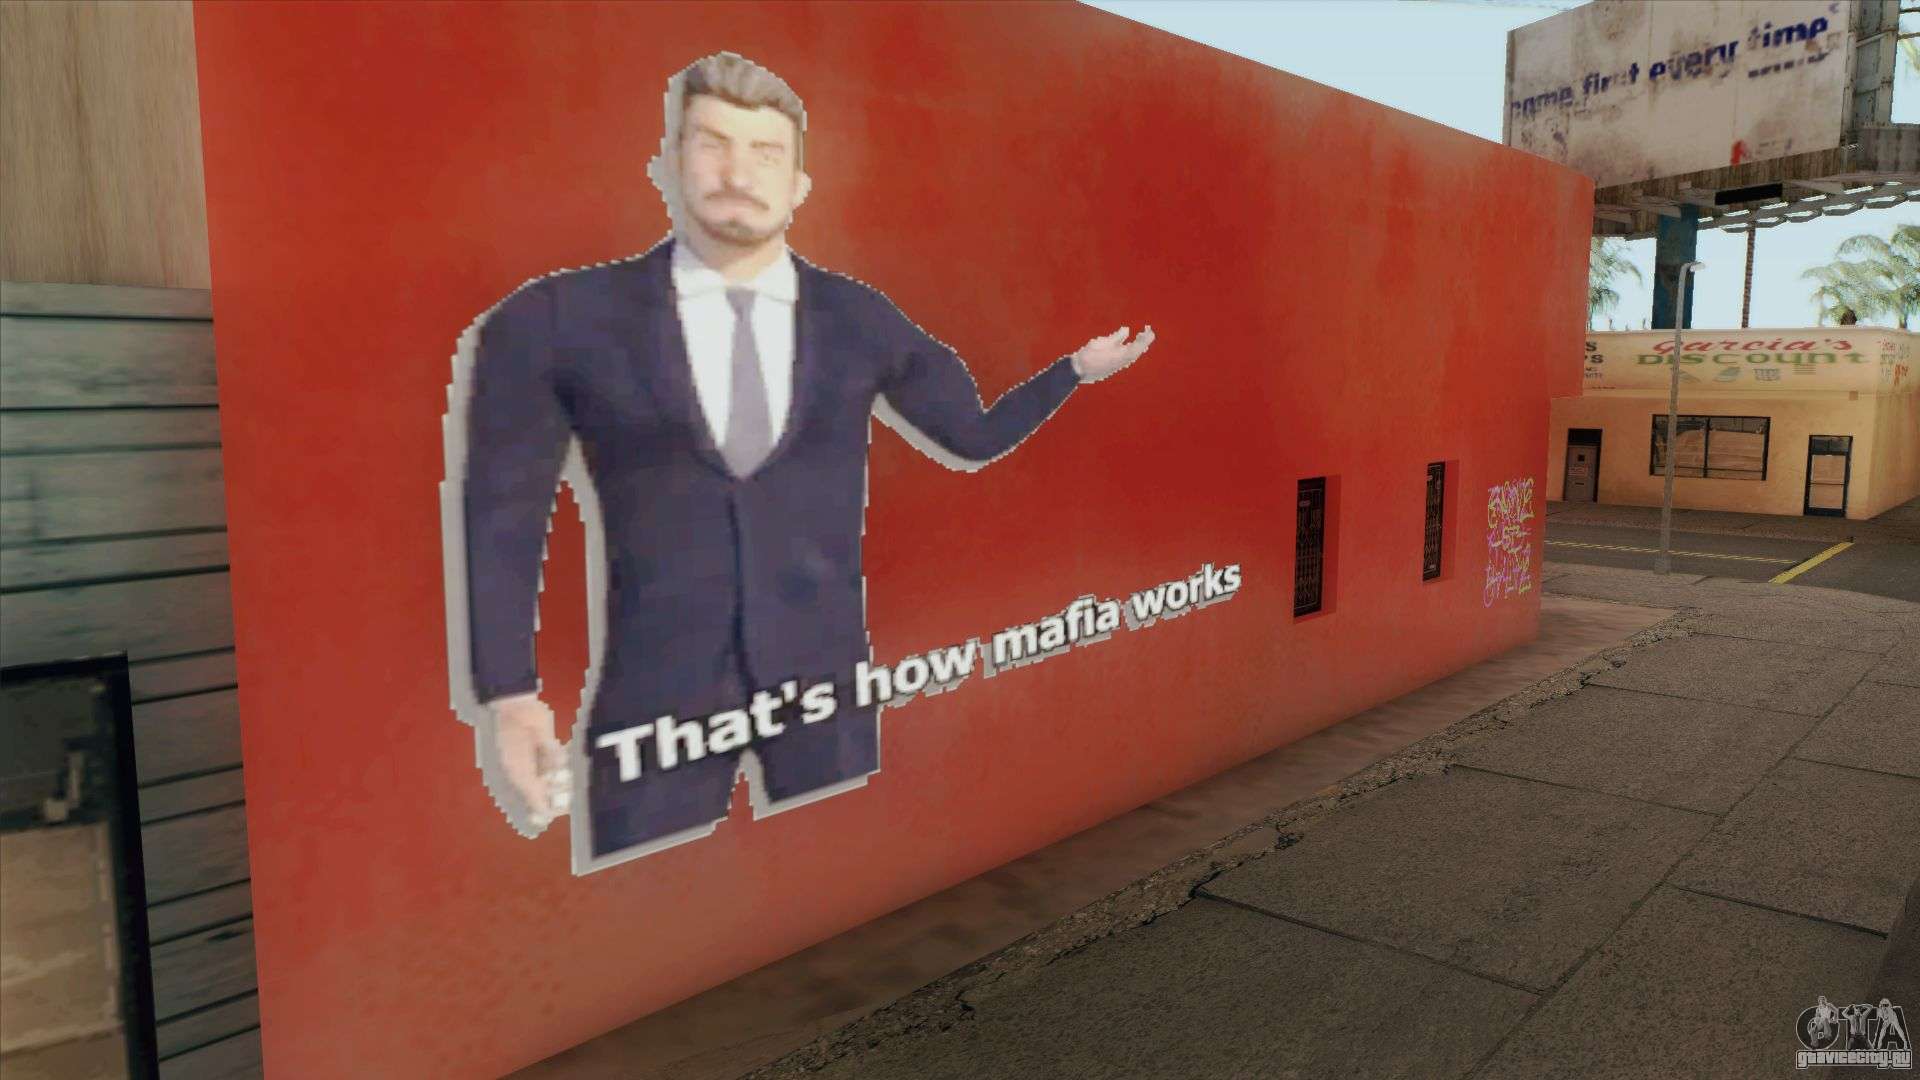 Mafia City Meme Wall.